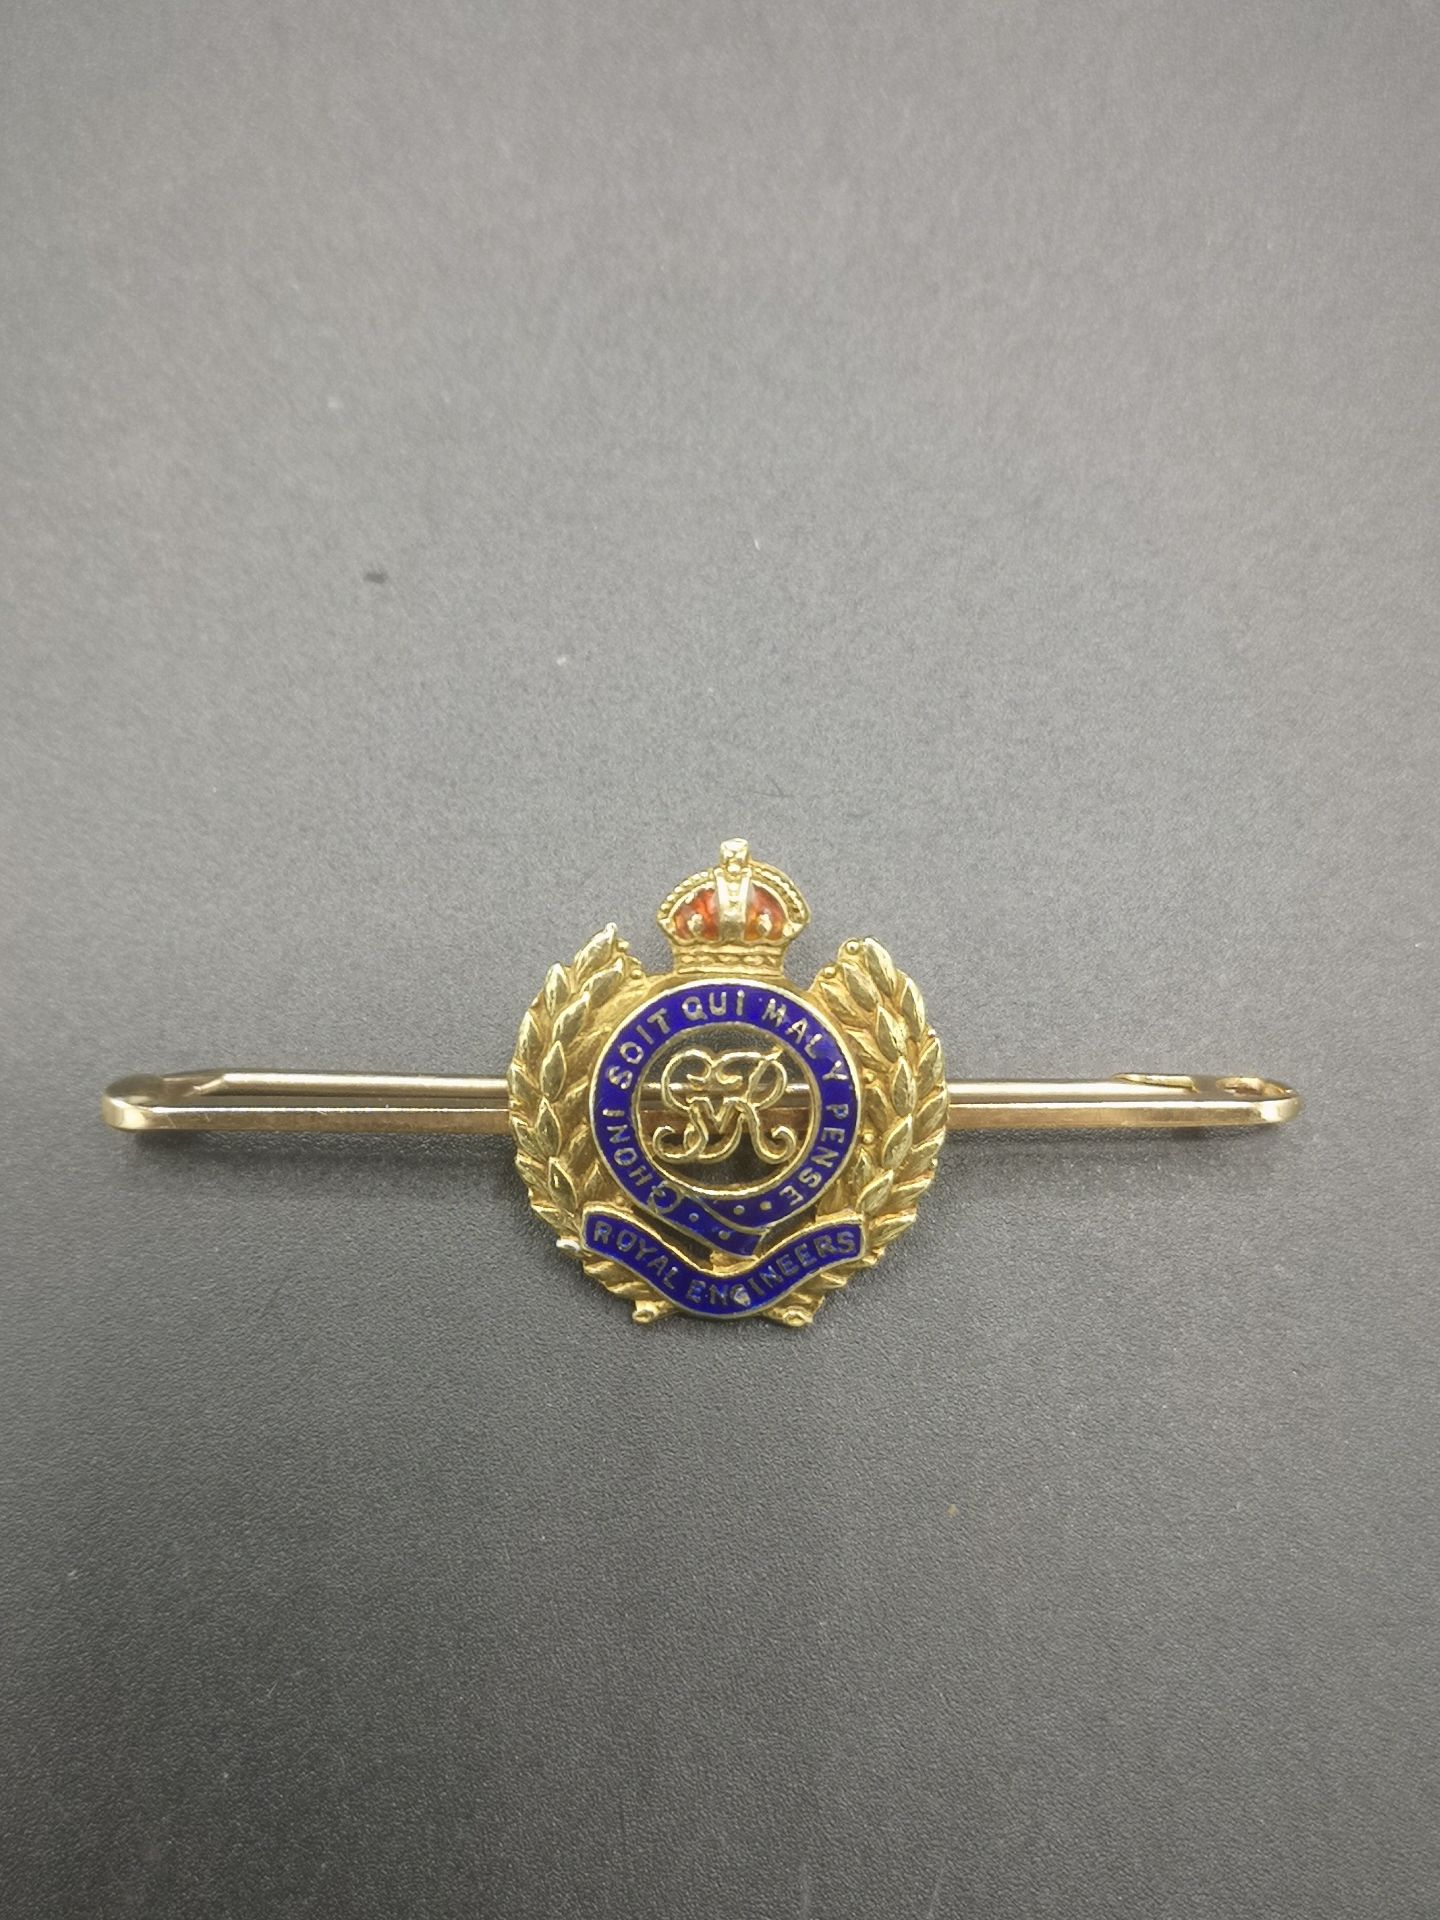 15ct gold Royal Engineers bar brooch - Image 2 of 3